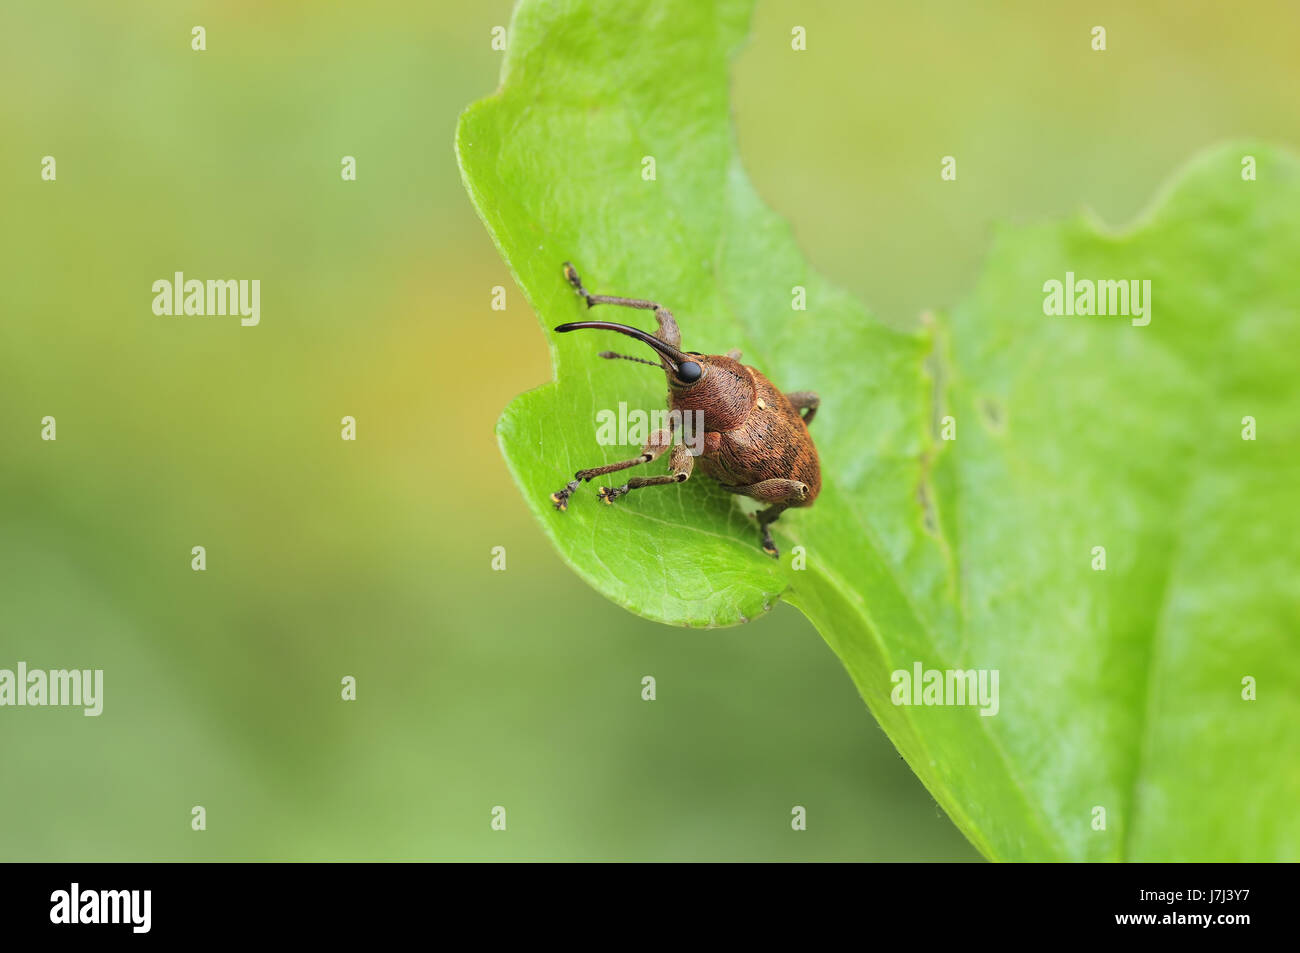 Foglia insetto animale beetle oak proboscide curculione leaf macro close-up macro Foto Stock